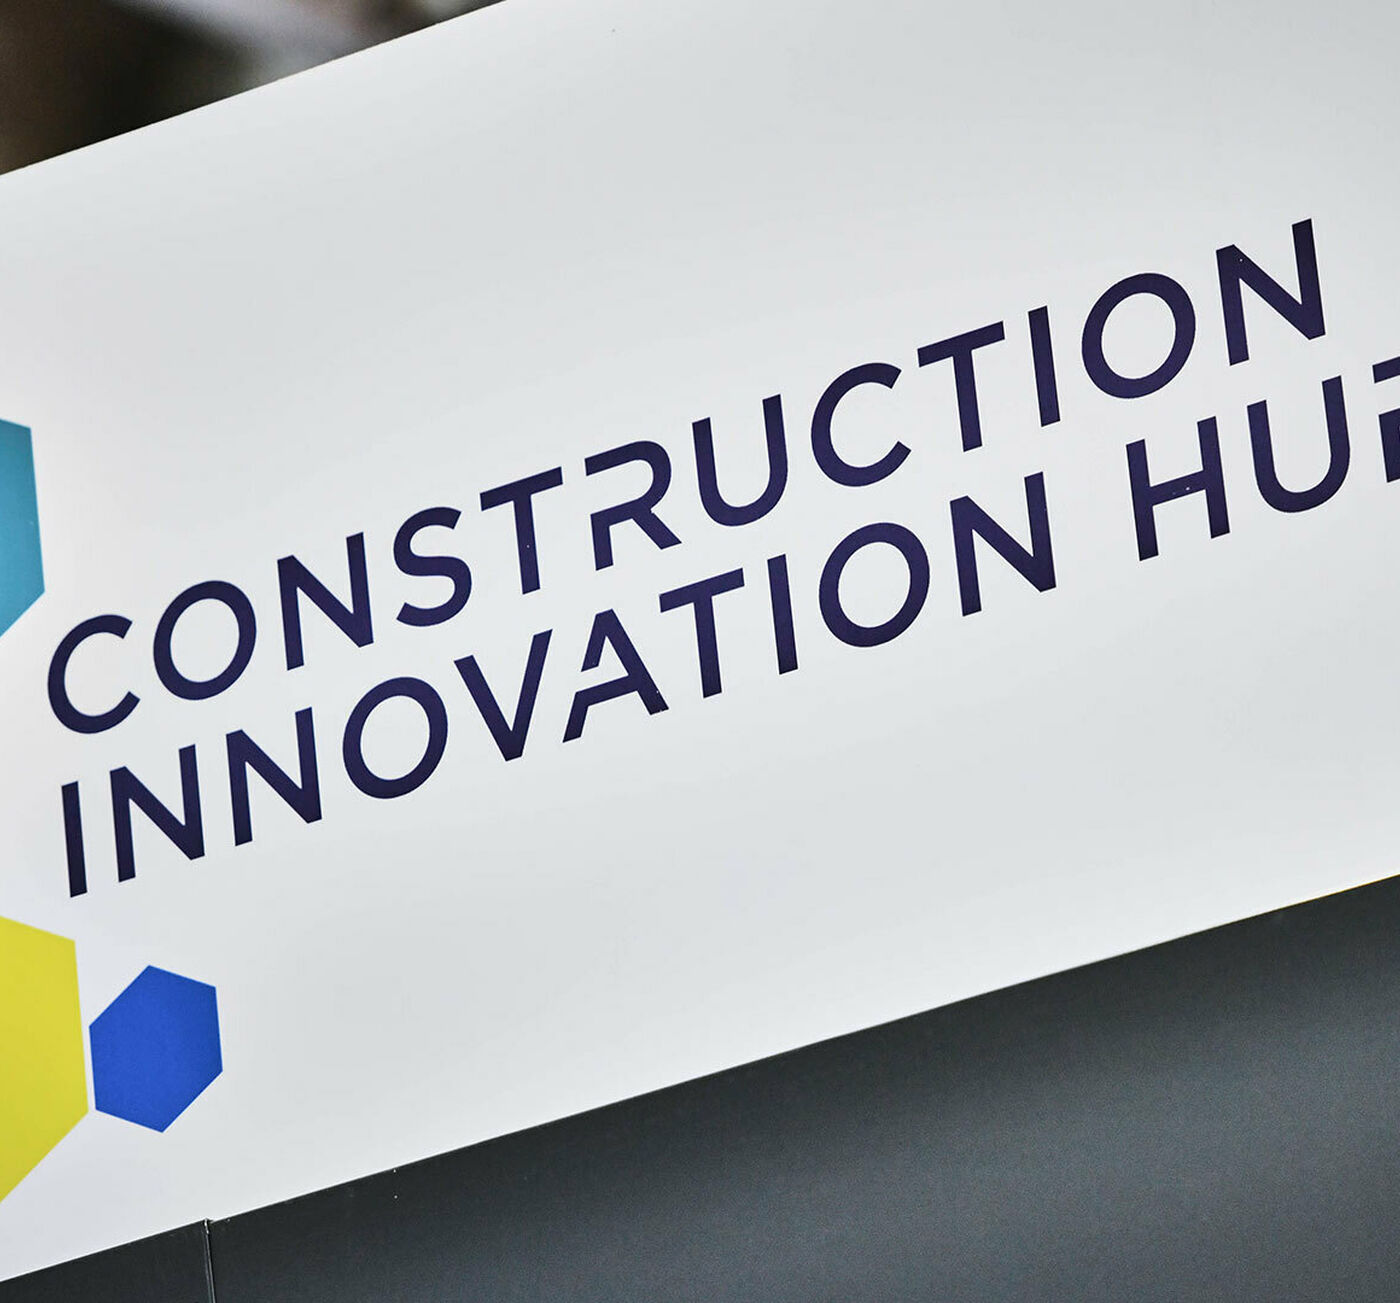 Construction Innovation Hub Stand Logo